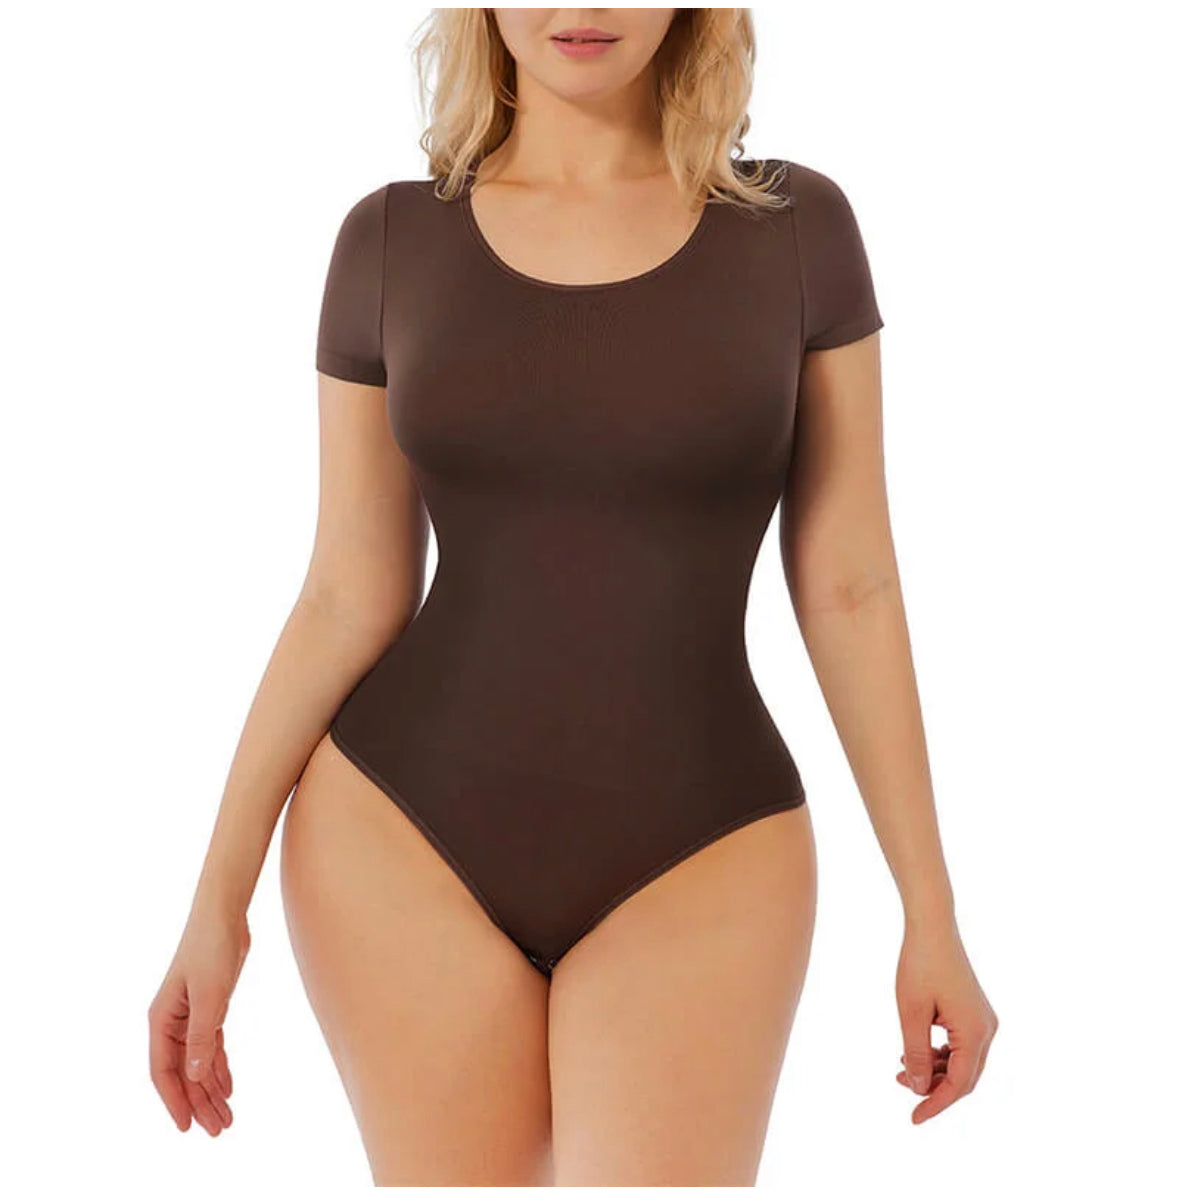 1-2 Bodysuit Full Body Shaper Waist Cincher Firm Tummy Control 65011 Plus  size JENNIFER Размер: 4XL (18-20) купить от 2651 рублей в интернет-магазине  , корректирующее белье для женщин J